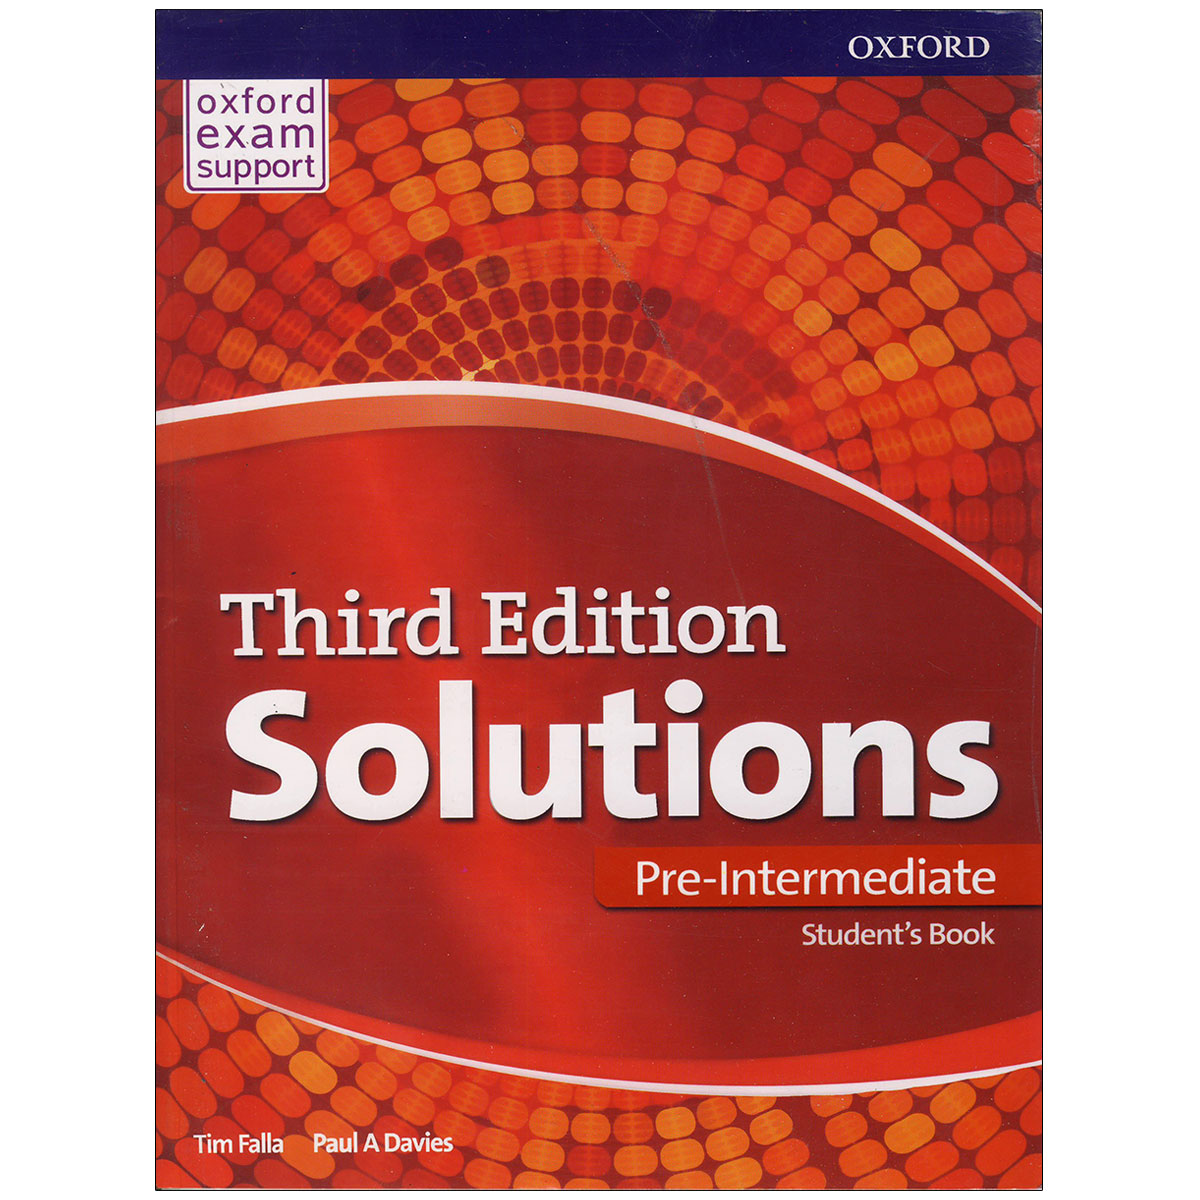 Solutions inter. Solutions pre-Intermediate 3rd. Third Edition solutions Workbook Oxford. Солюшенс пре интермедиат 3 издание. Pre-Intermediate Intermediate b1.